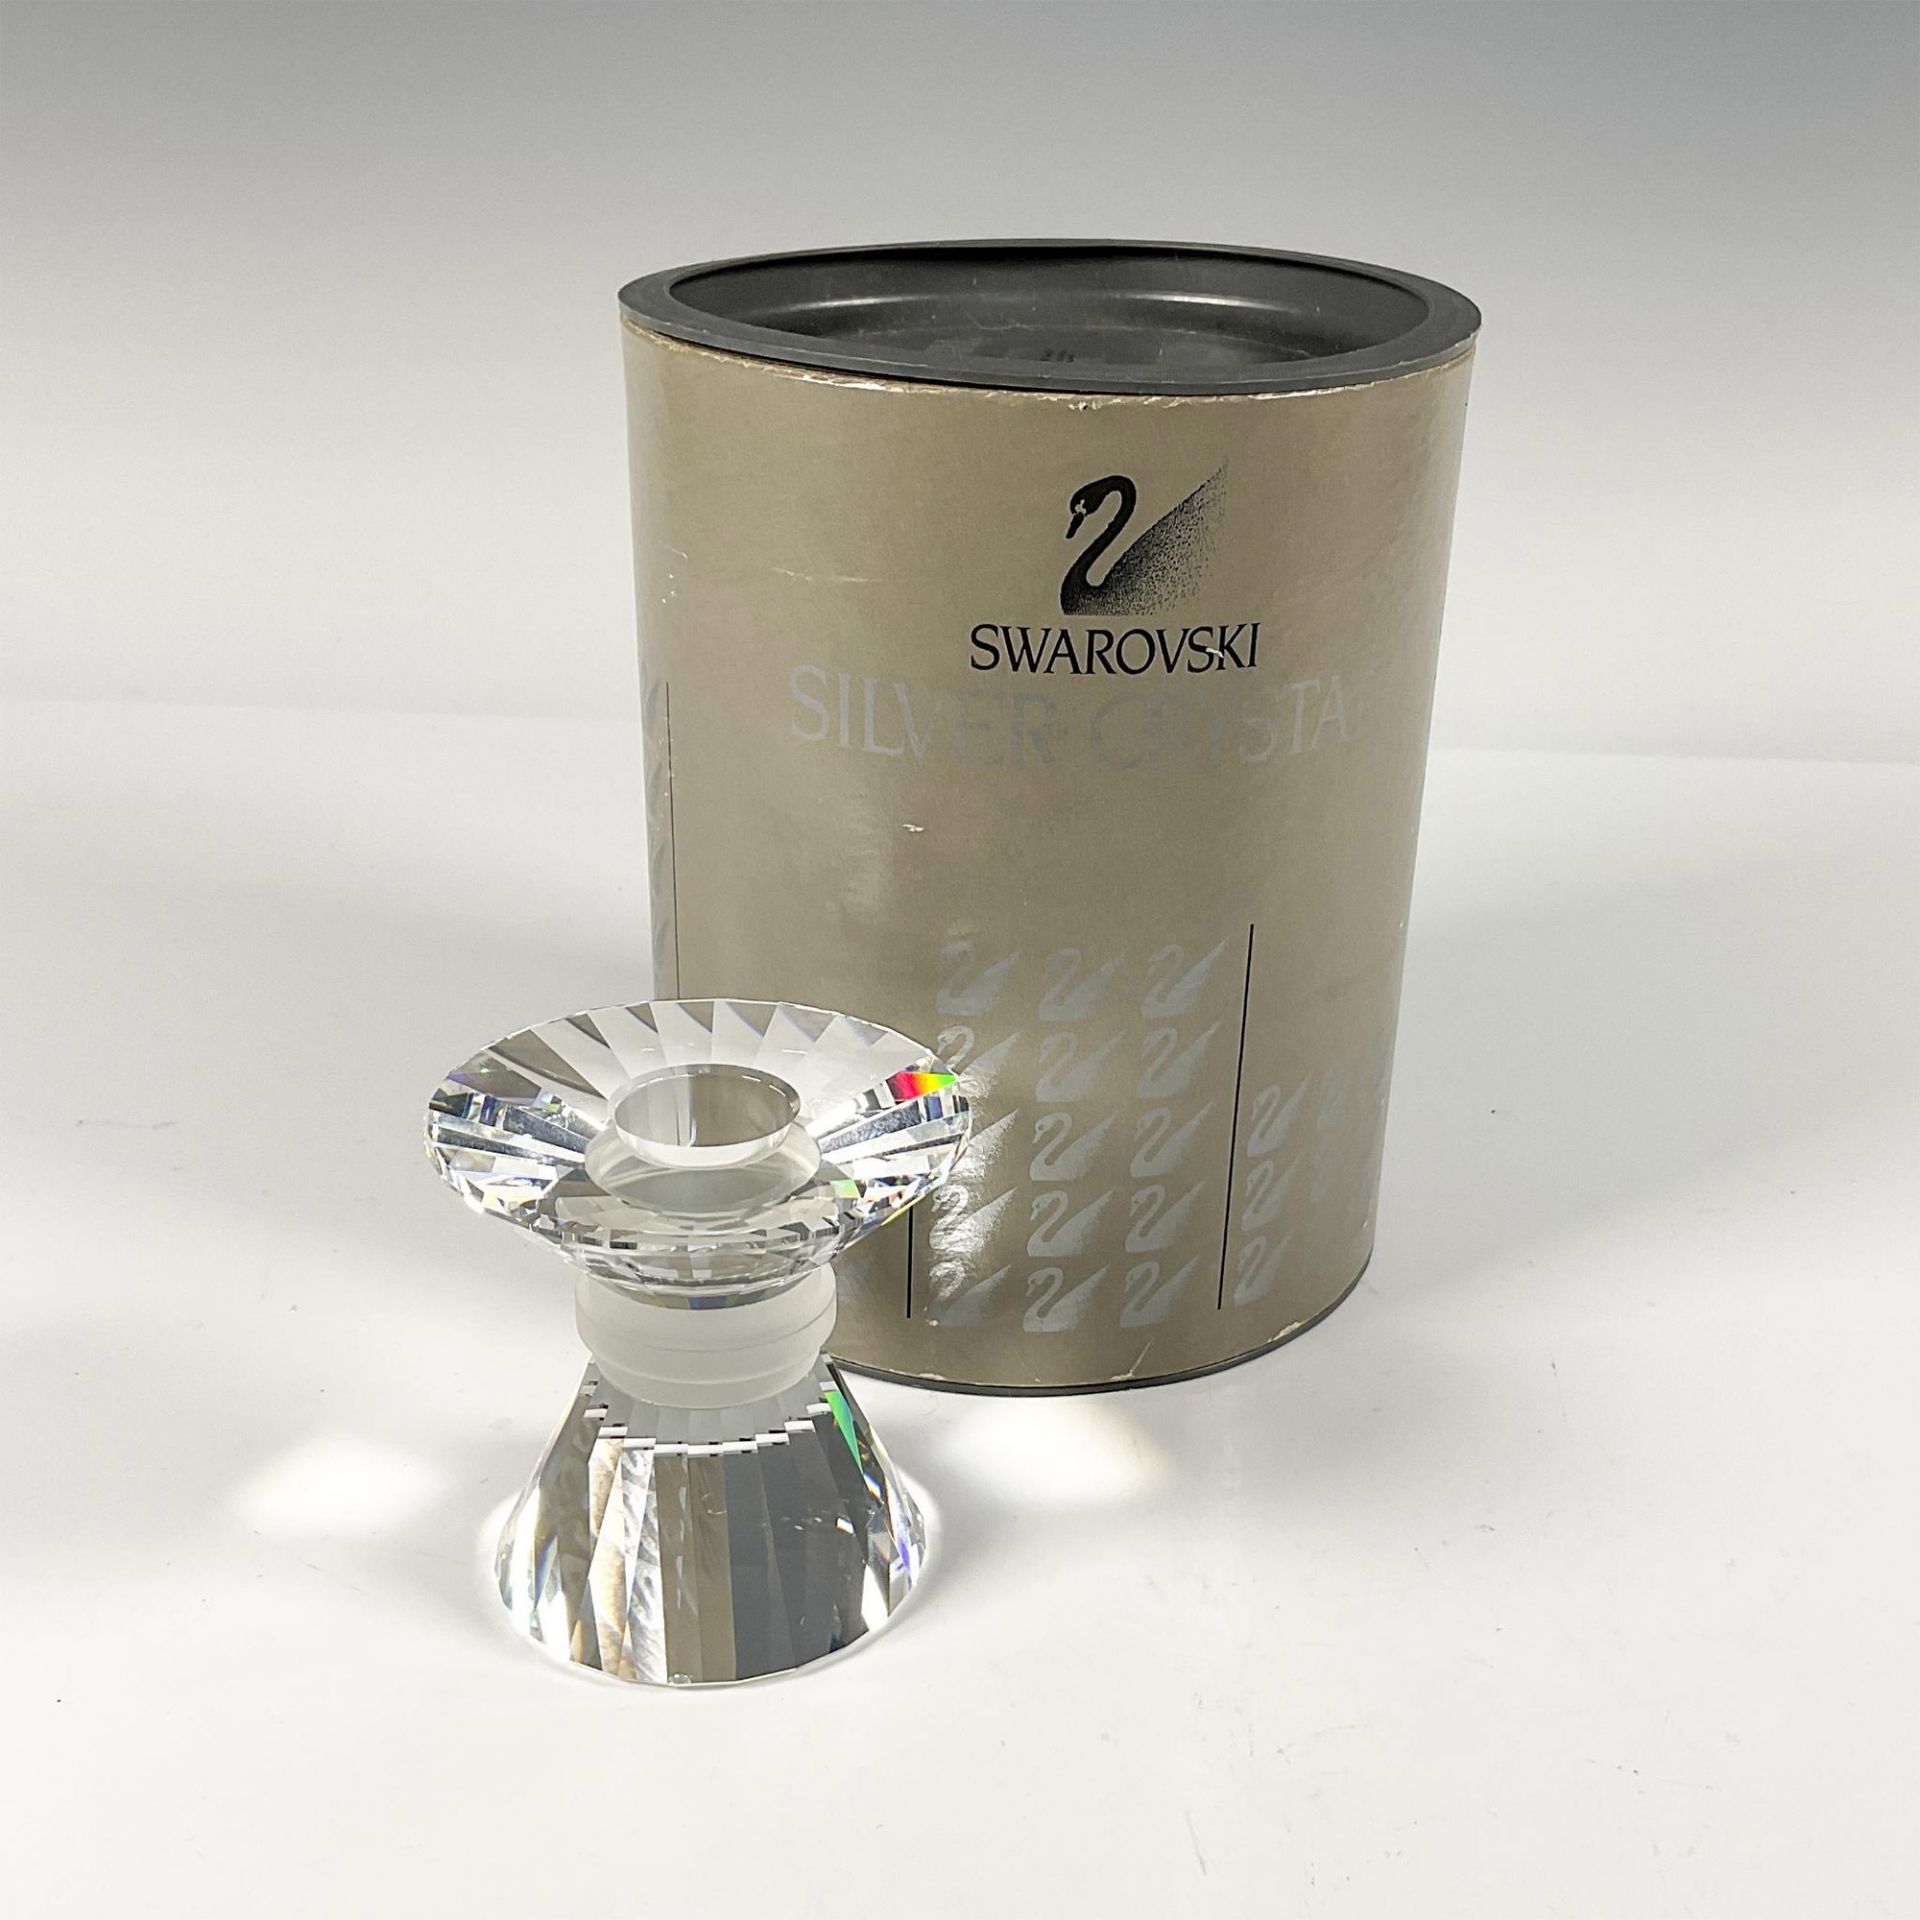 Swarovski Lead Crystal Candleholder - Image 4 of 4